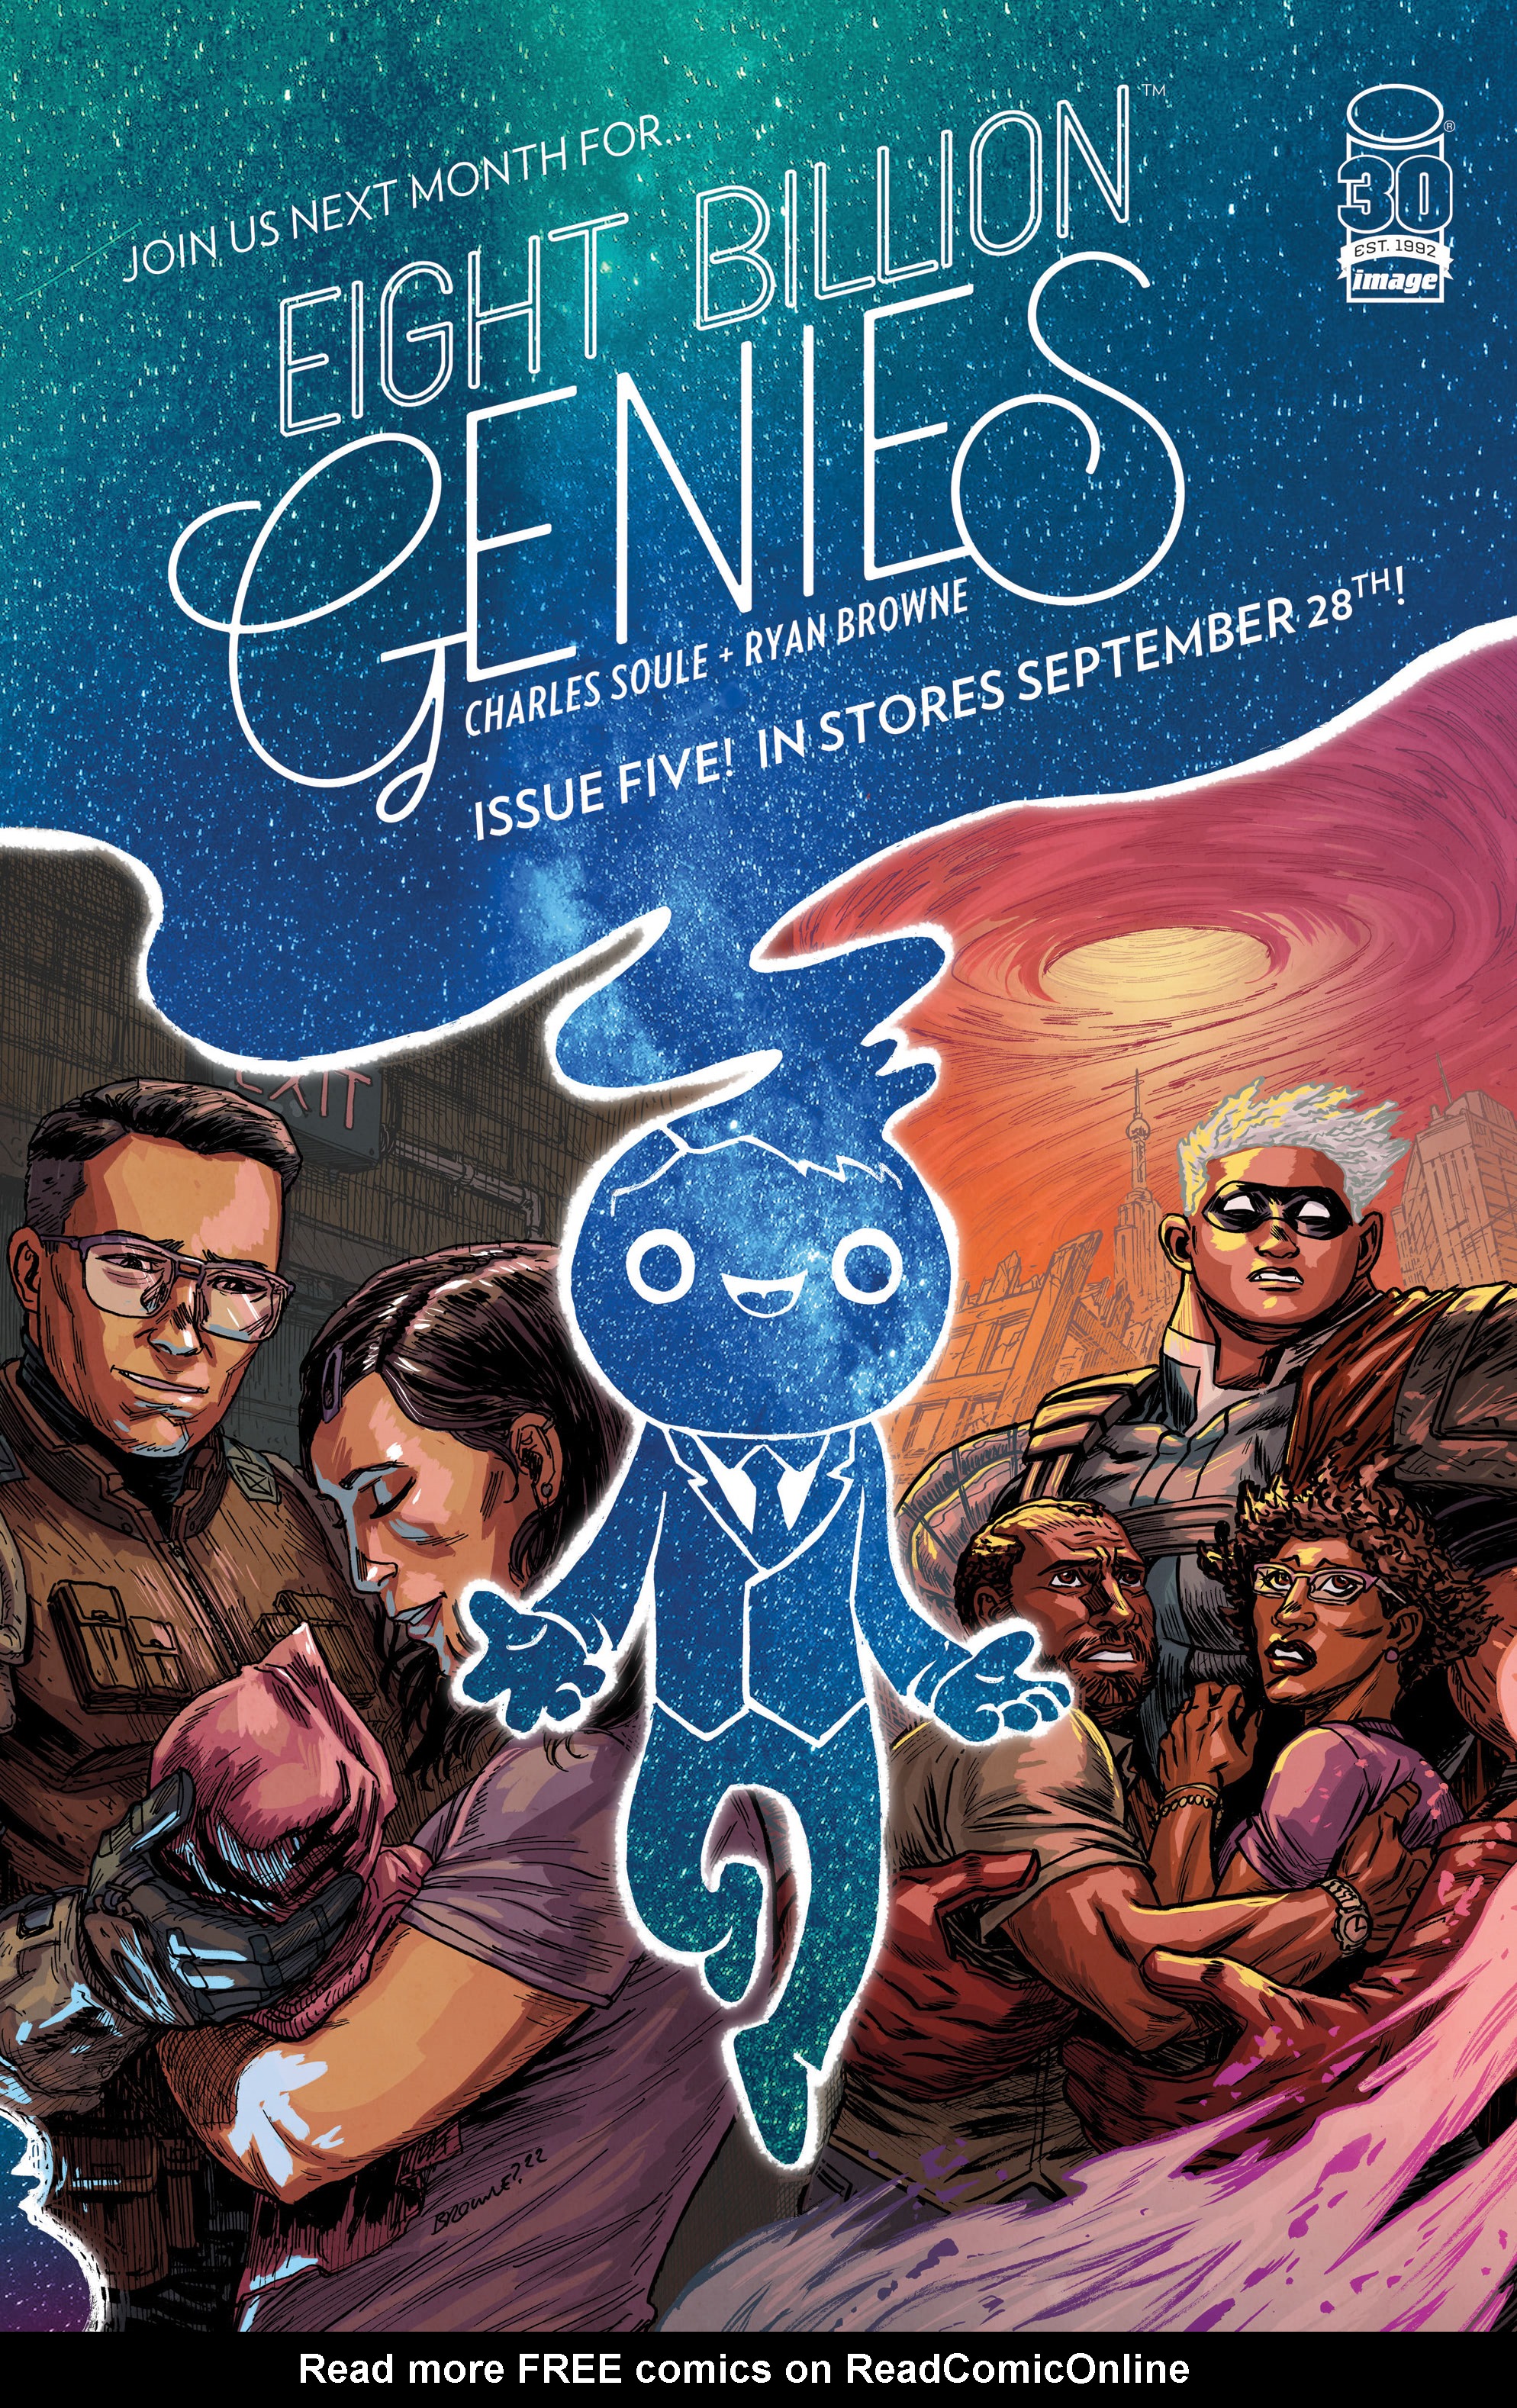 Read online Eight Billion Genies comic -  Issue #4 - 28